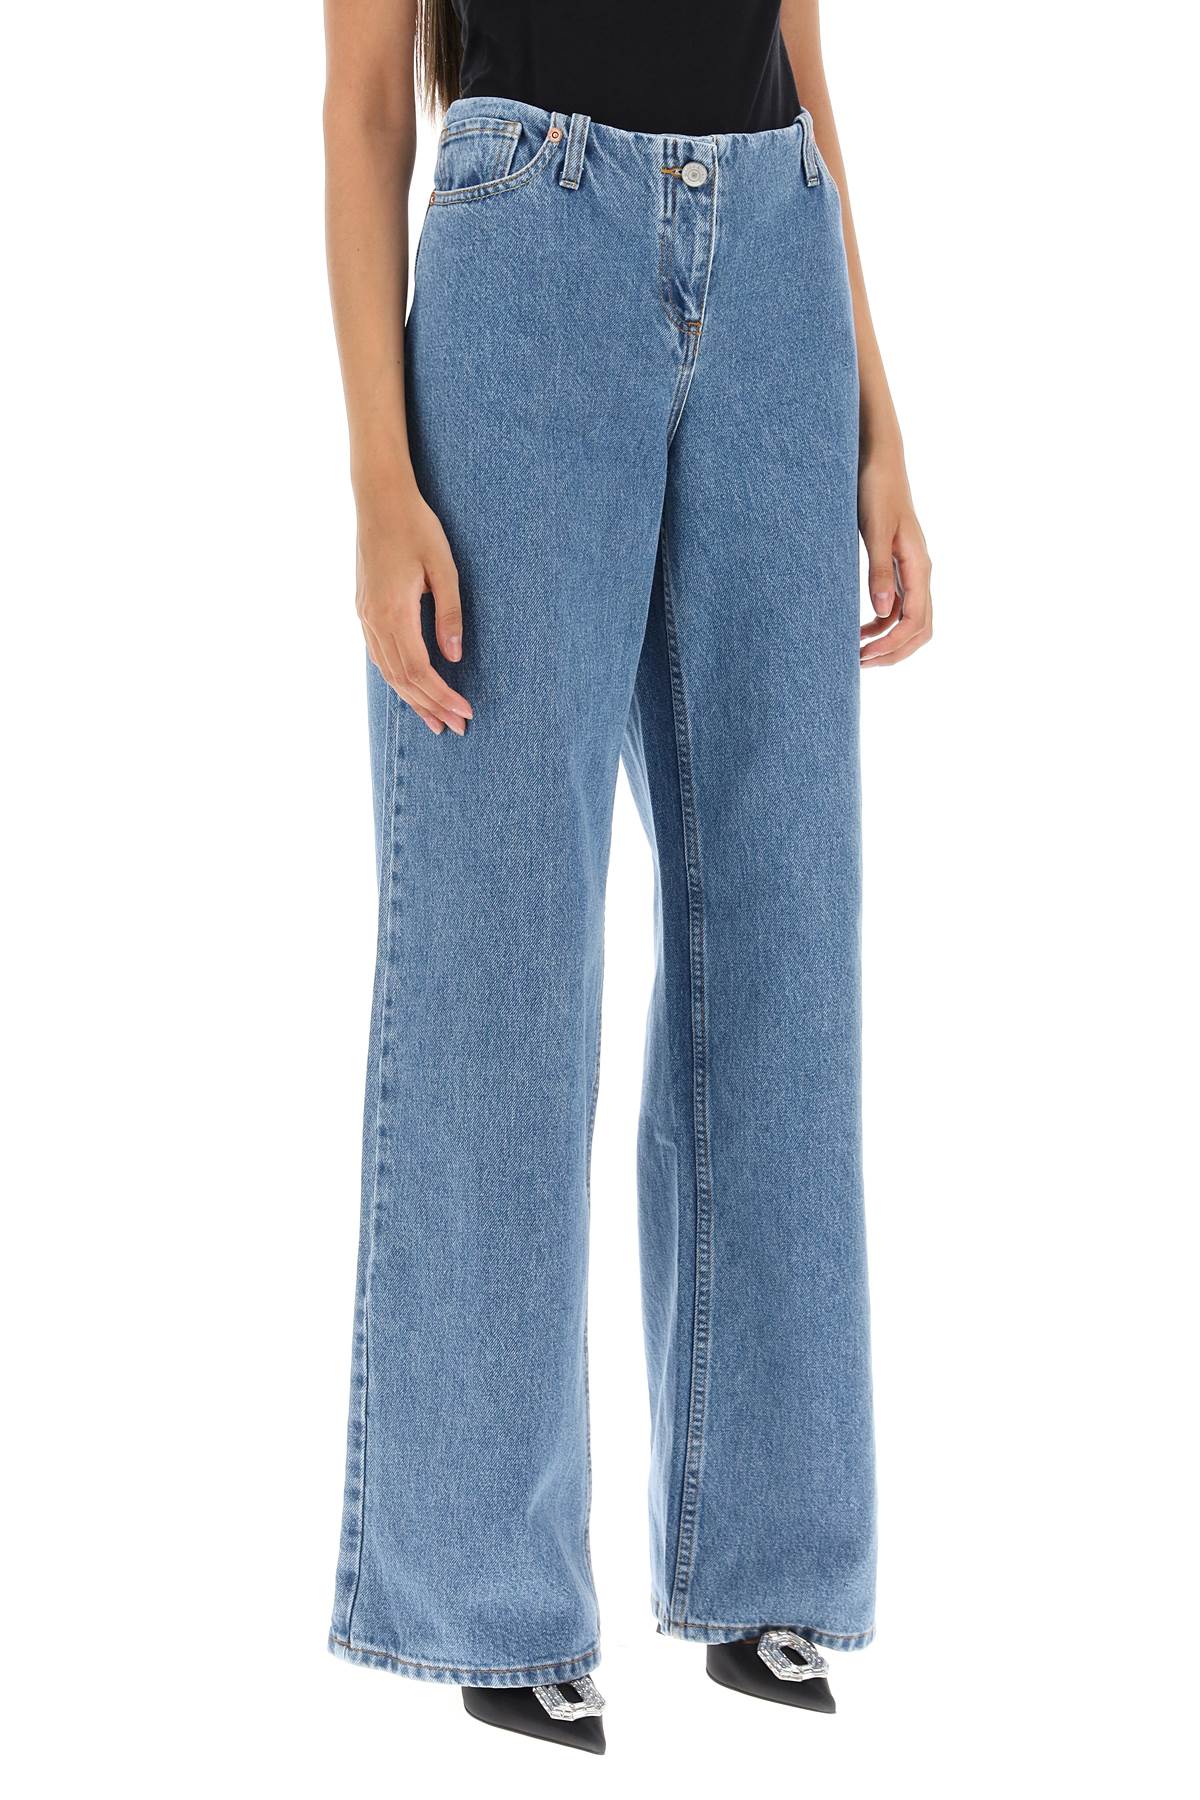 Magda butrym low waist baggy jeans-1